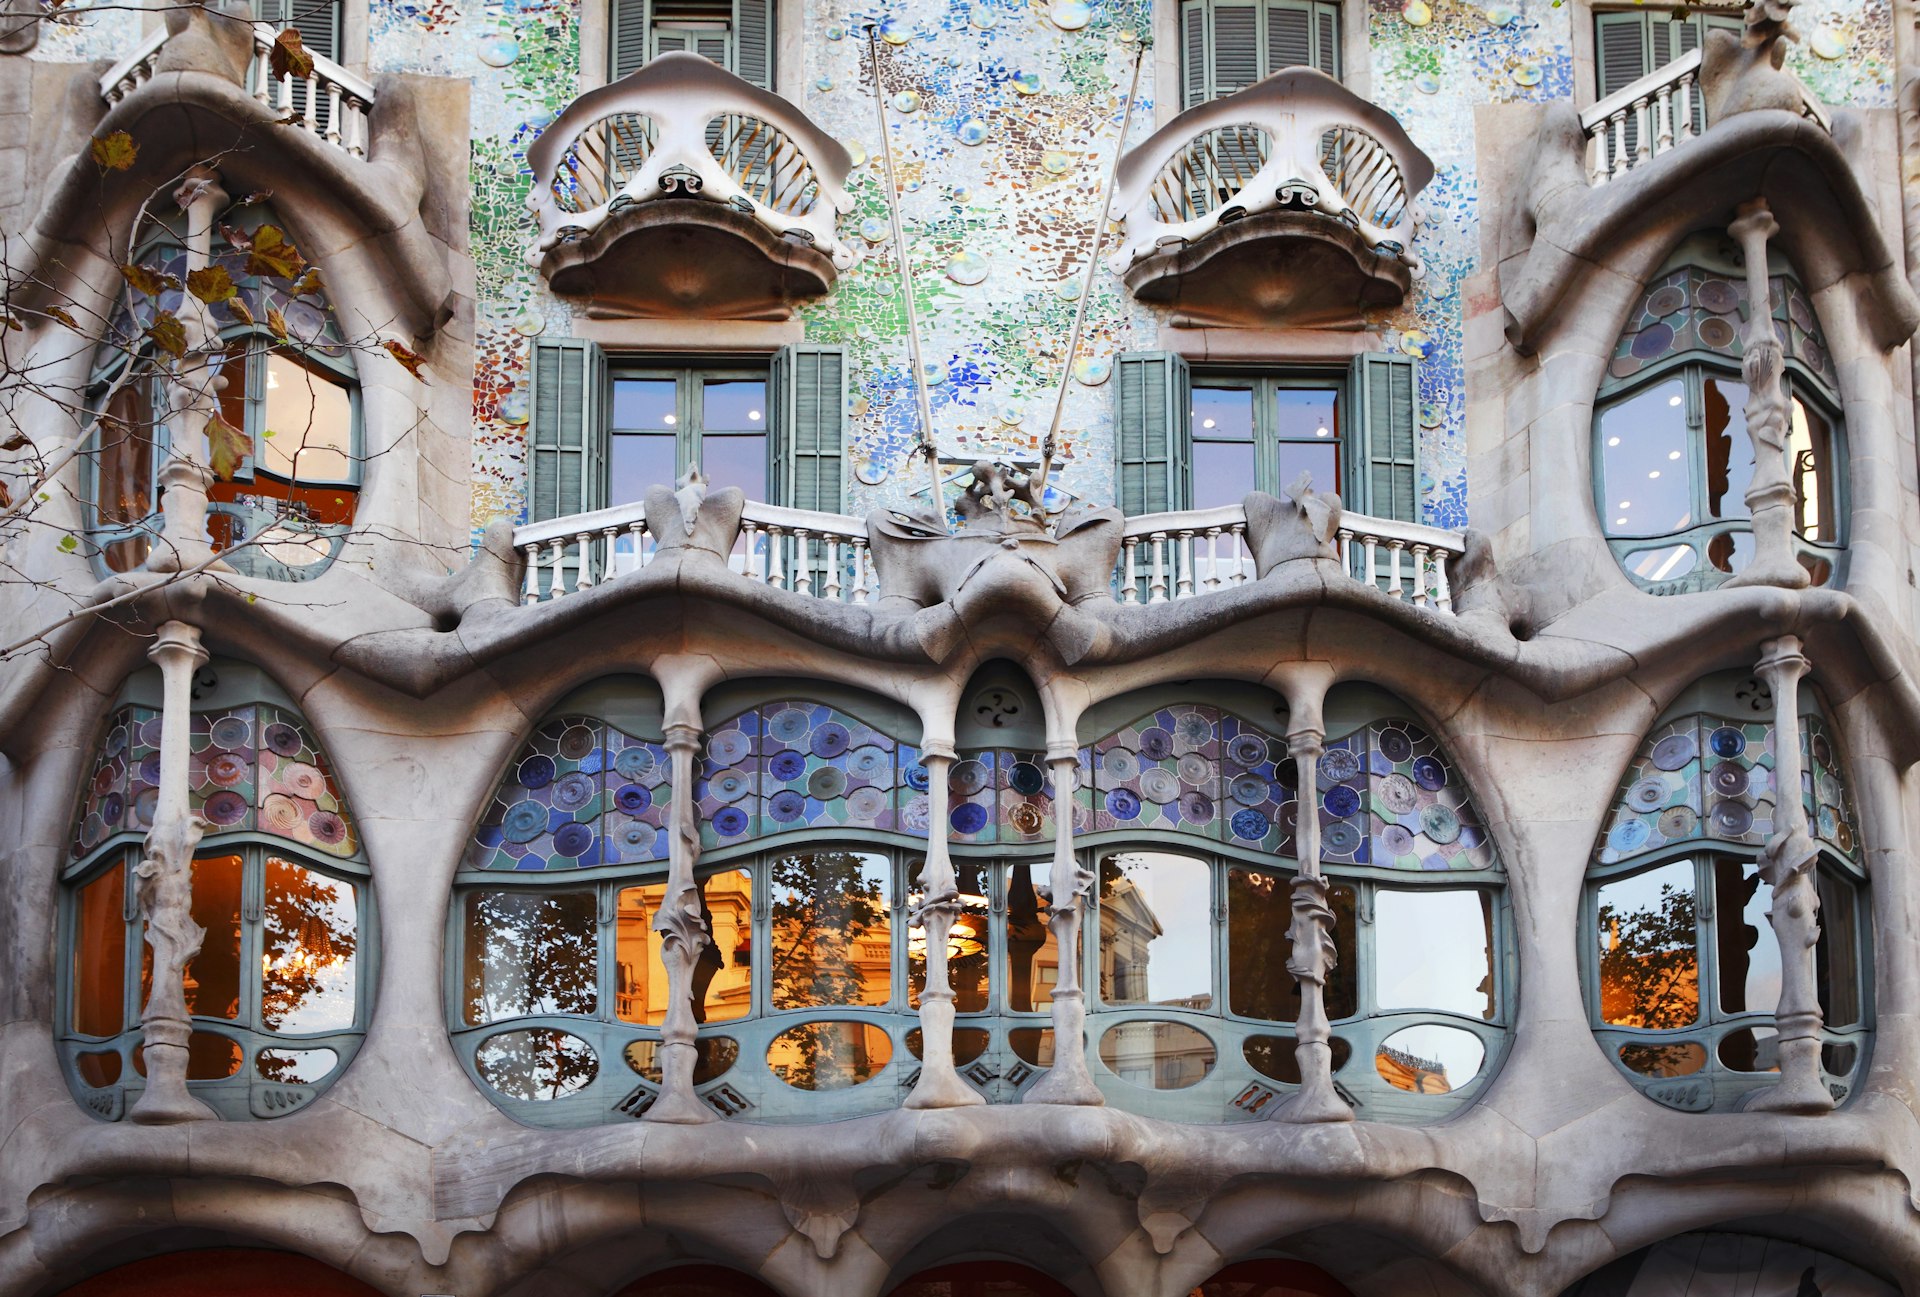 Colorful exterior of Casa Batllo in Barcelona, Spain